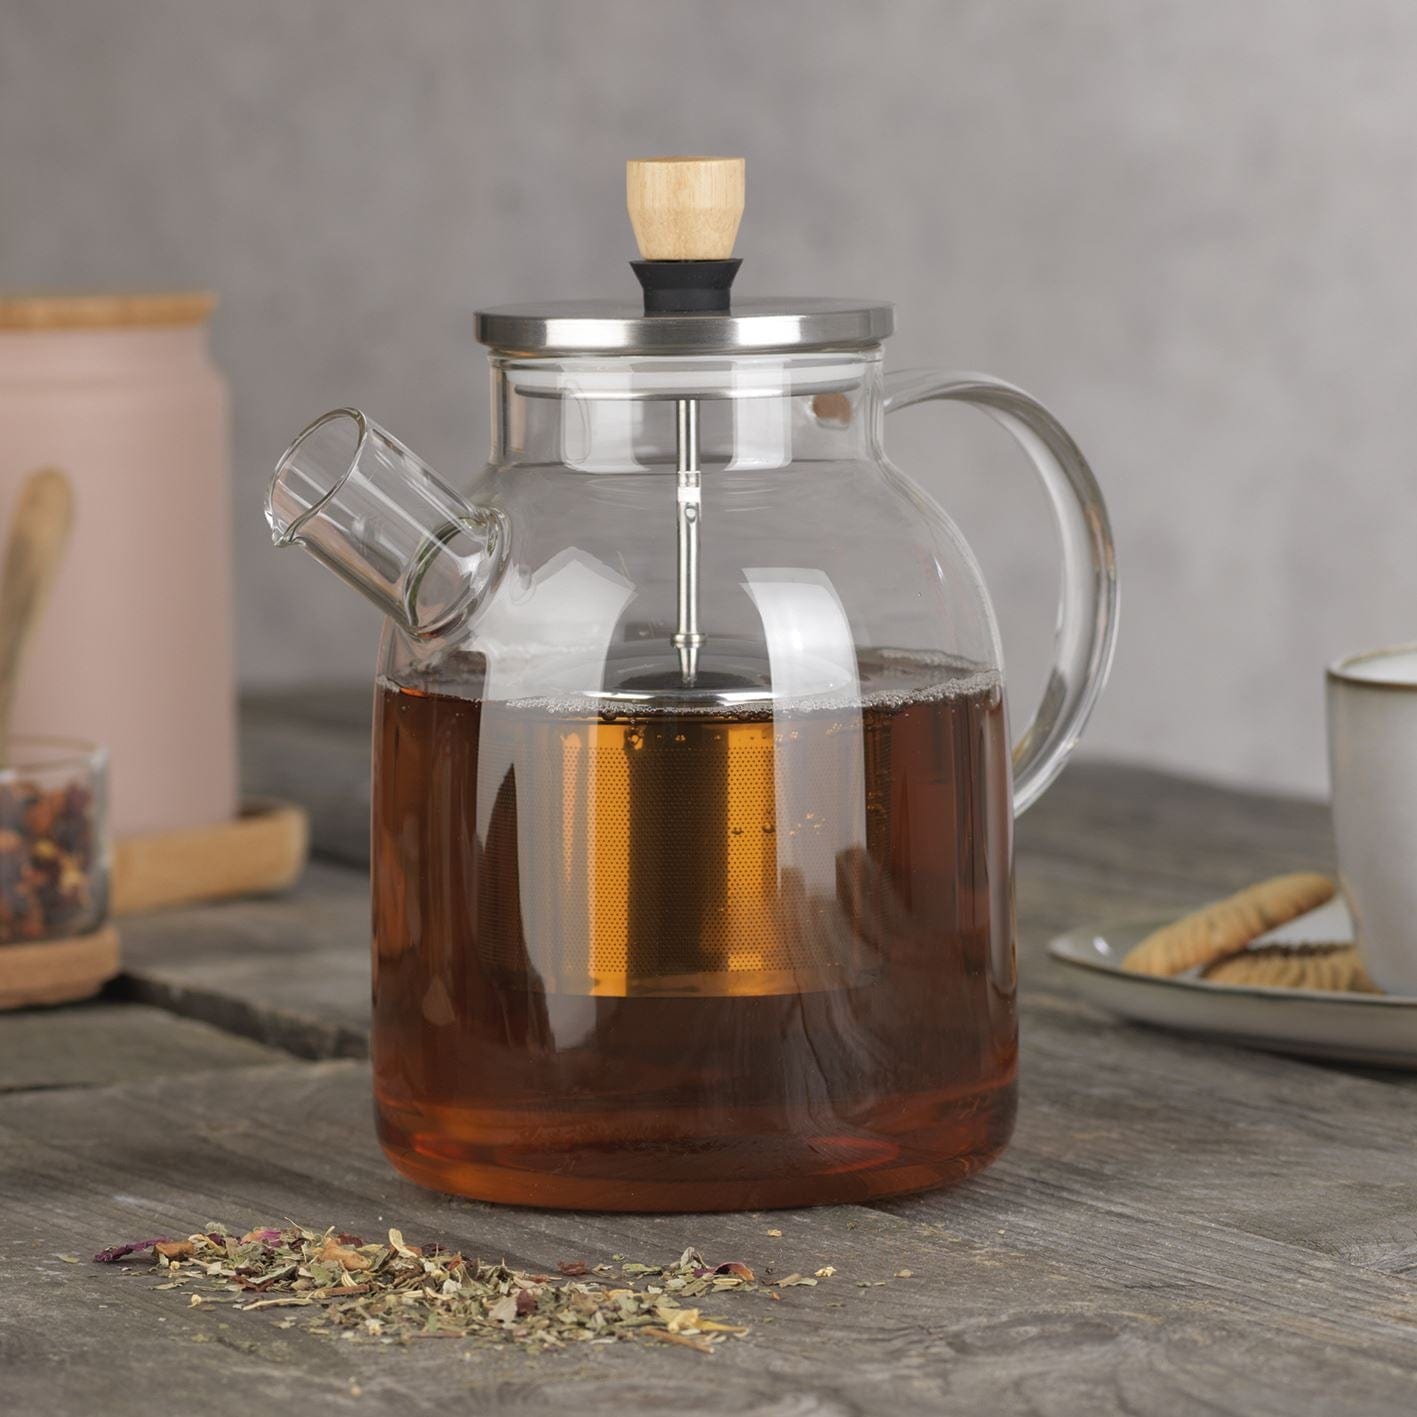 TEEKANNE Teapot with Strainer - Glass (1500ml)